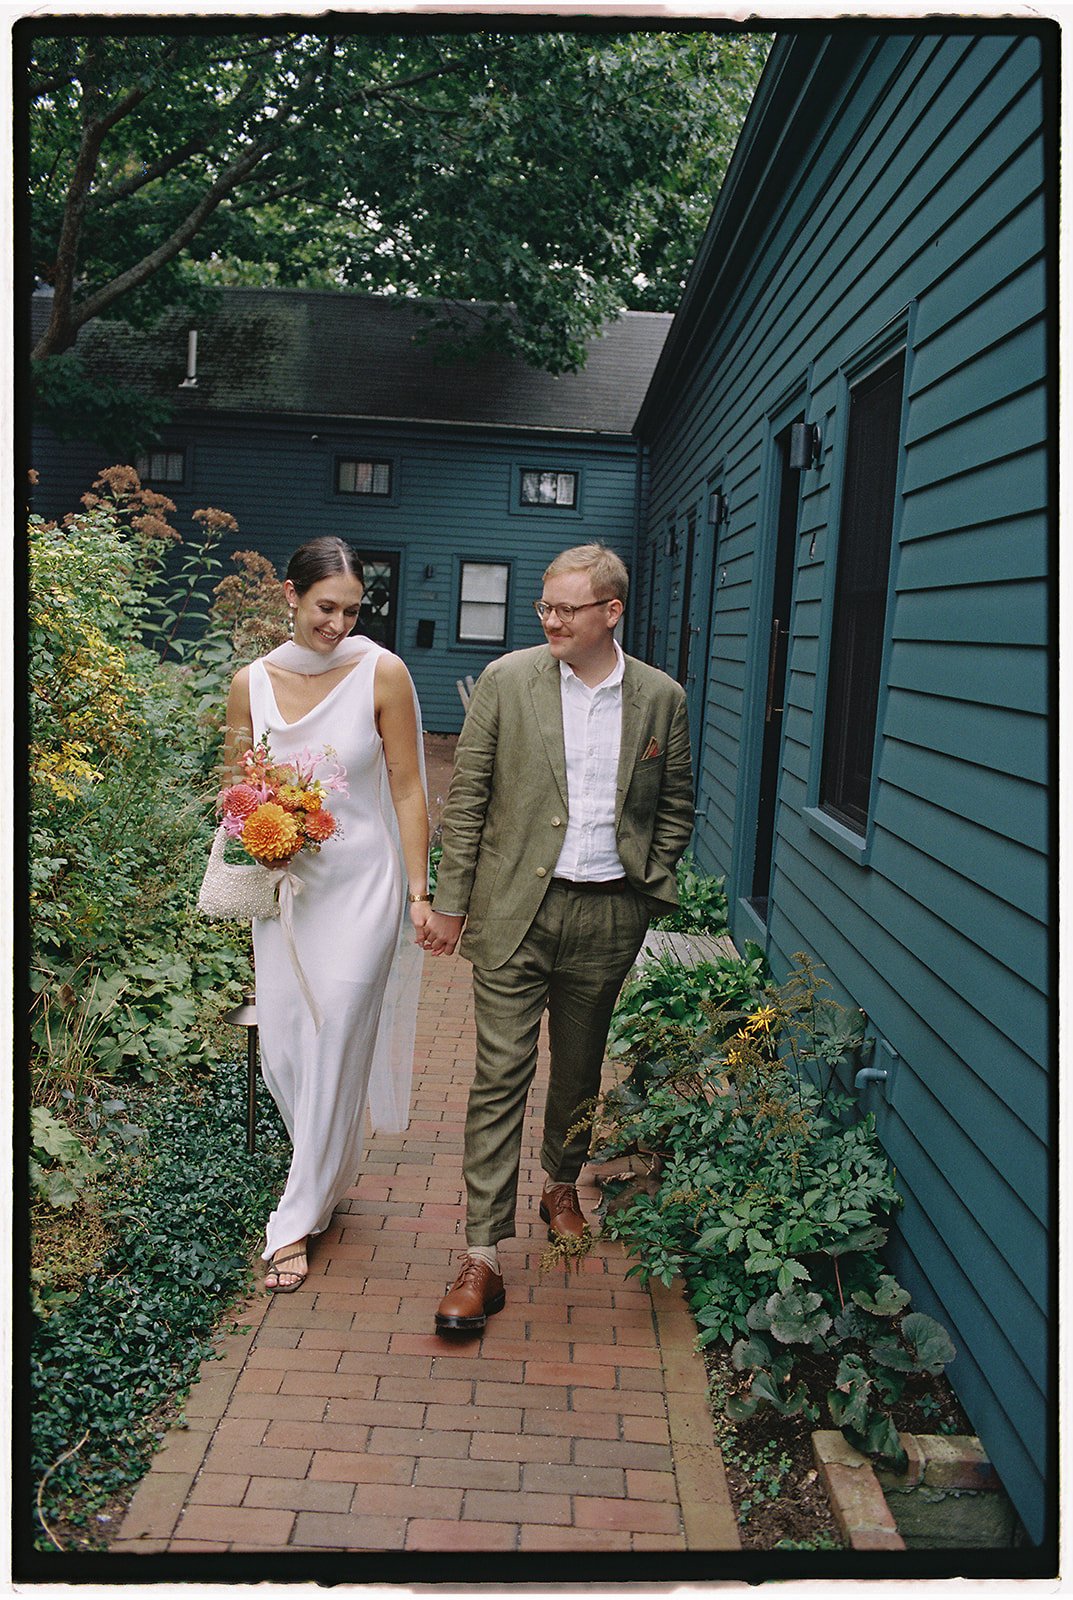 Best-Film-35mm-Austin-Wedding-Photographer-Portland-Maine-City-Hall-Super8-46.jpg